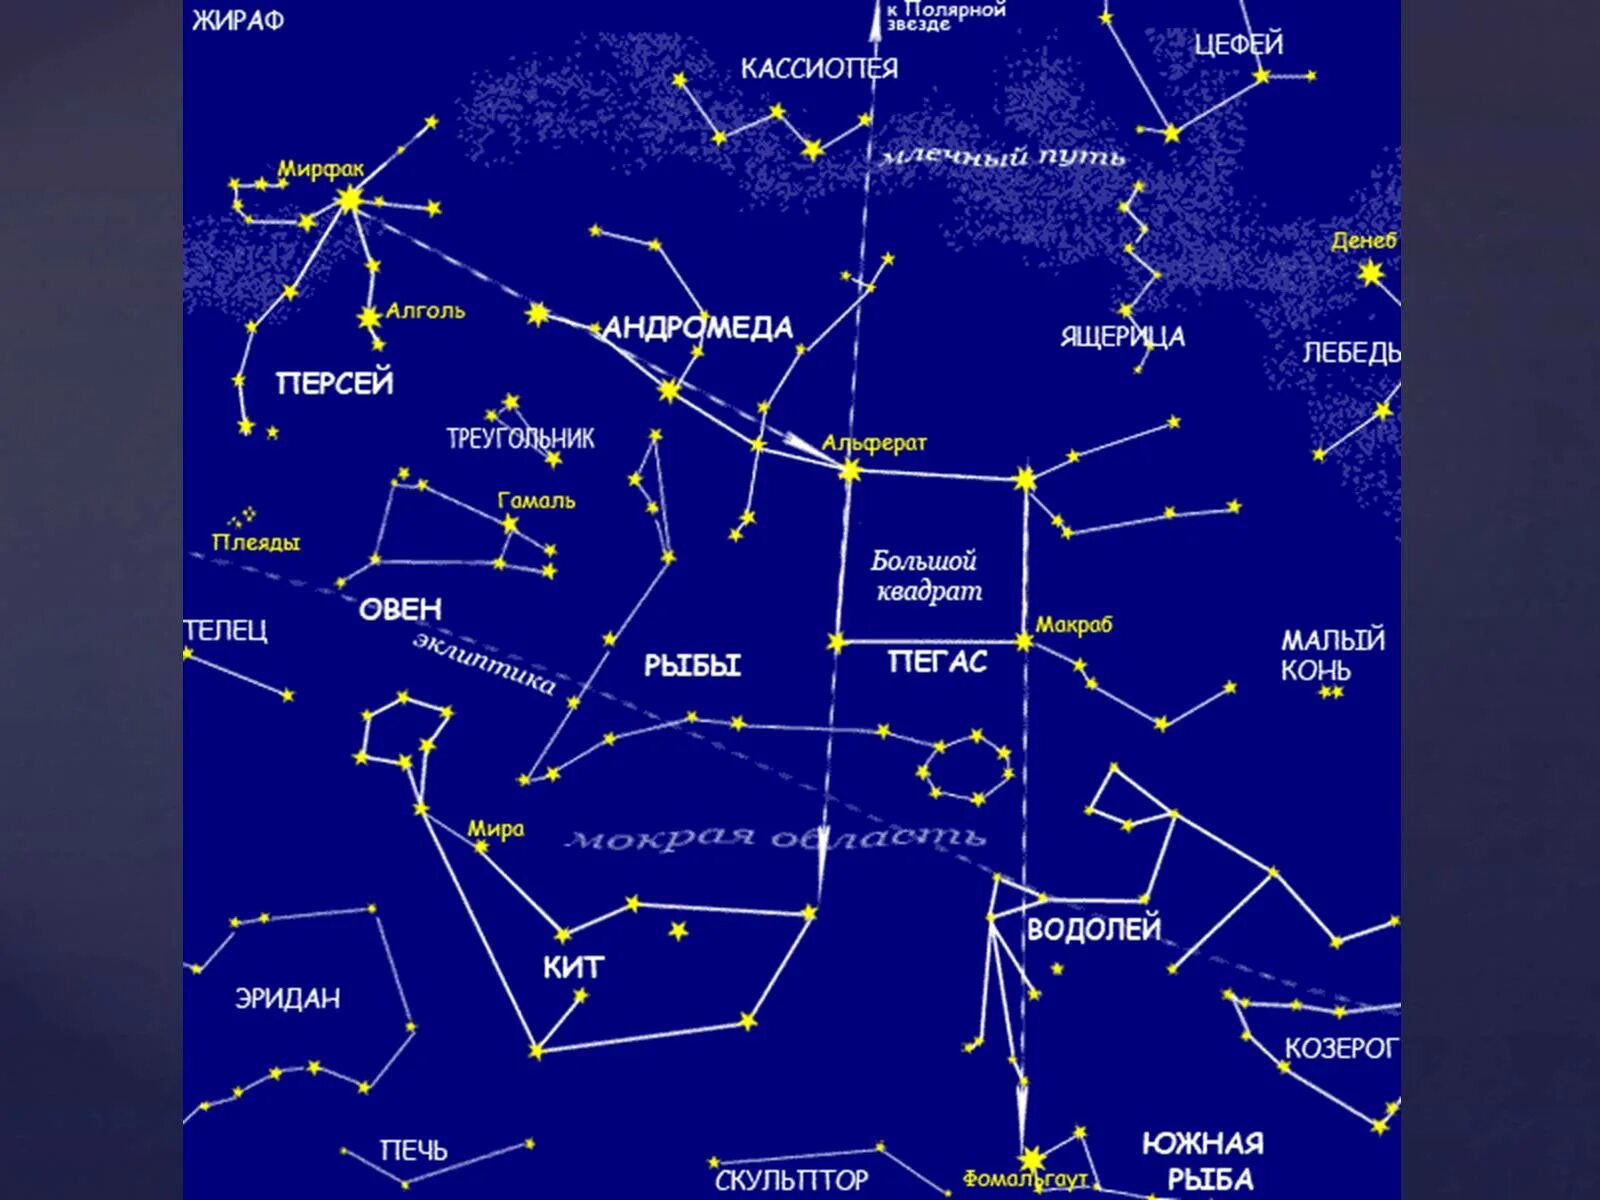 Созвездия. Звездное небо созвездия. Созвездия на небе и названия. Карта созвездий. Звездное небо какие созвездия